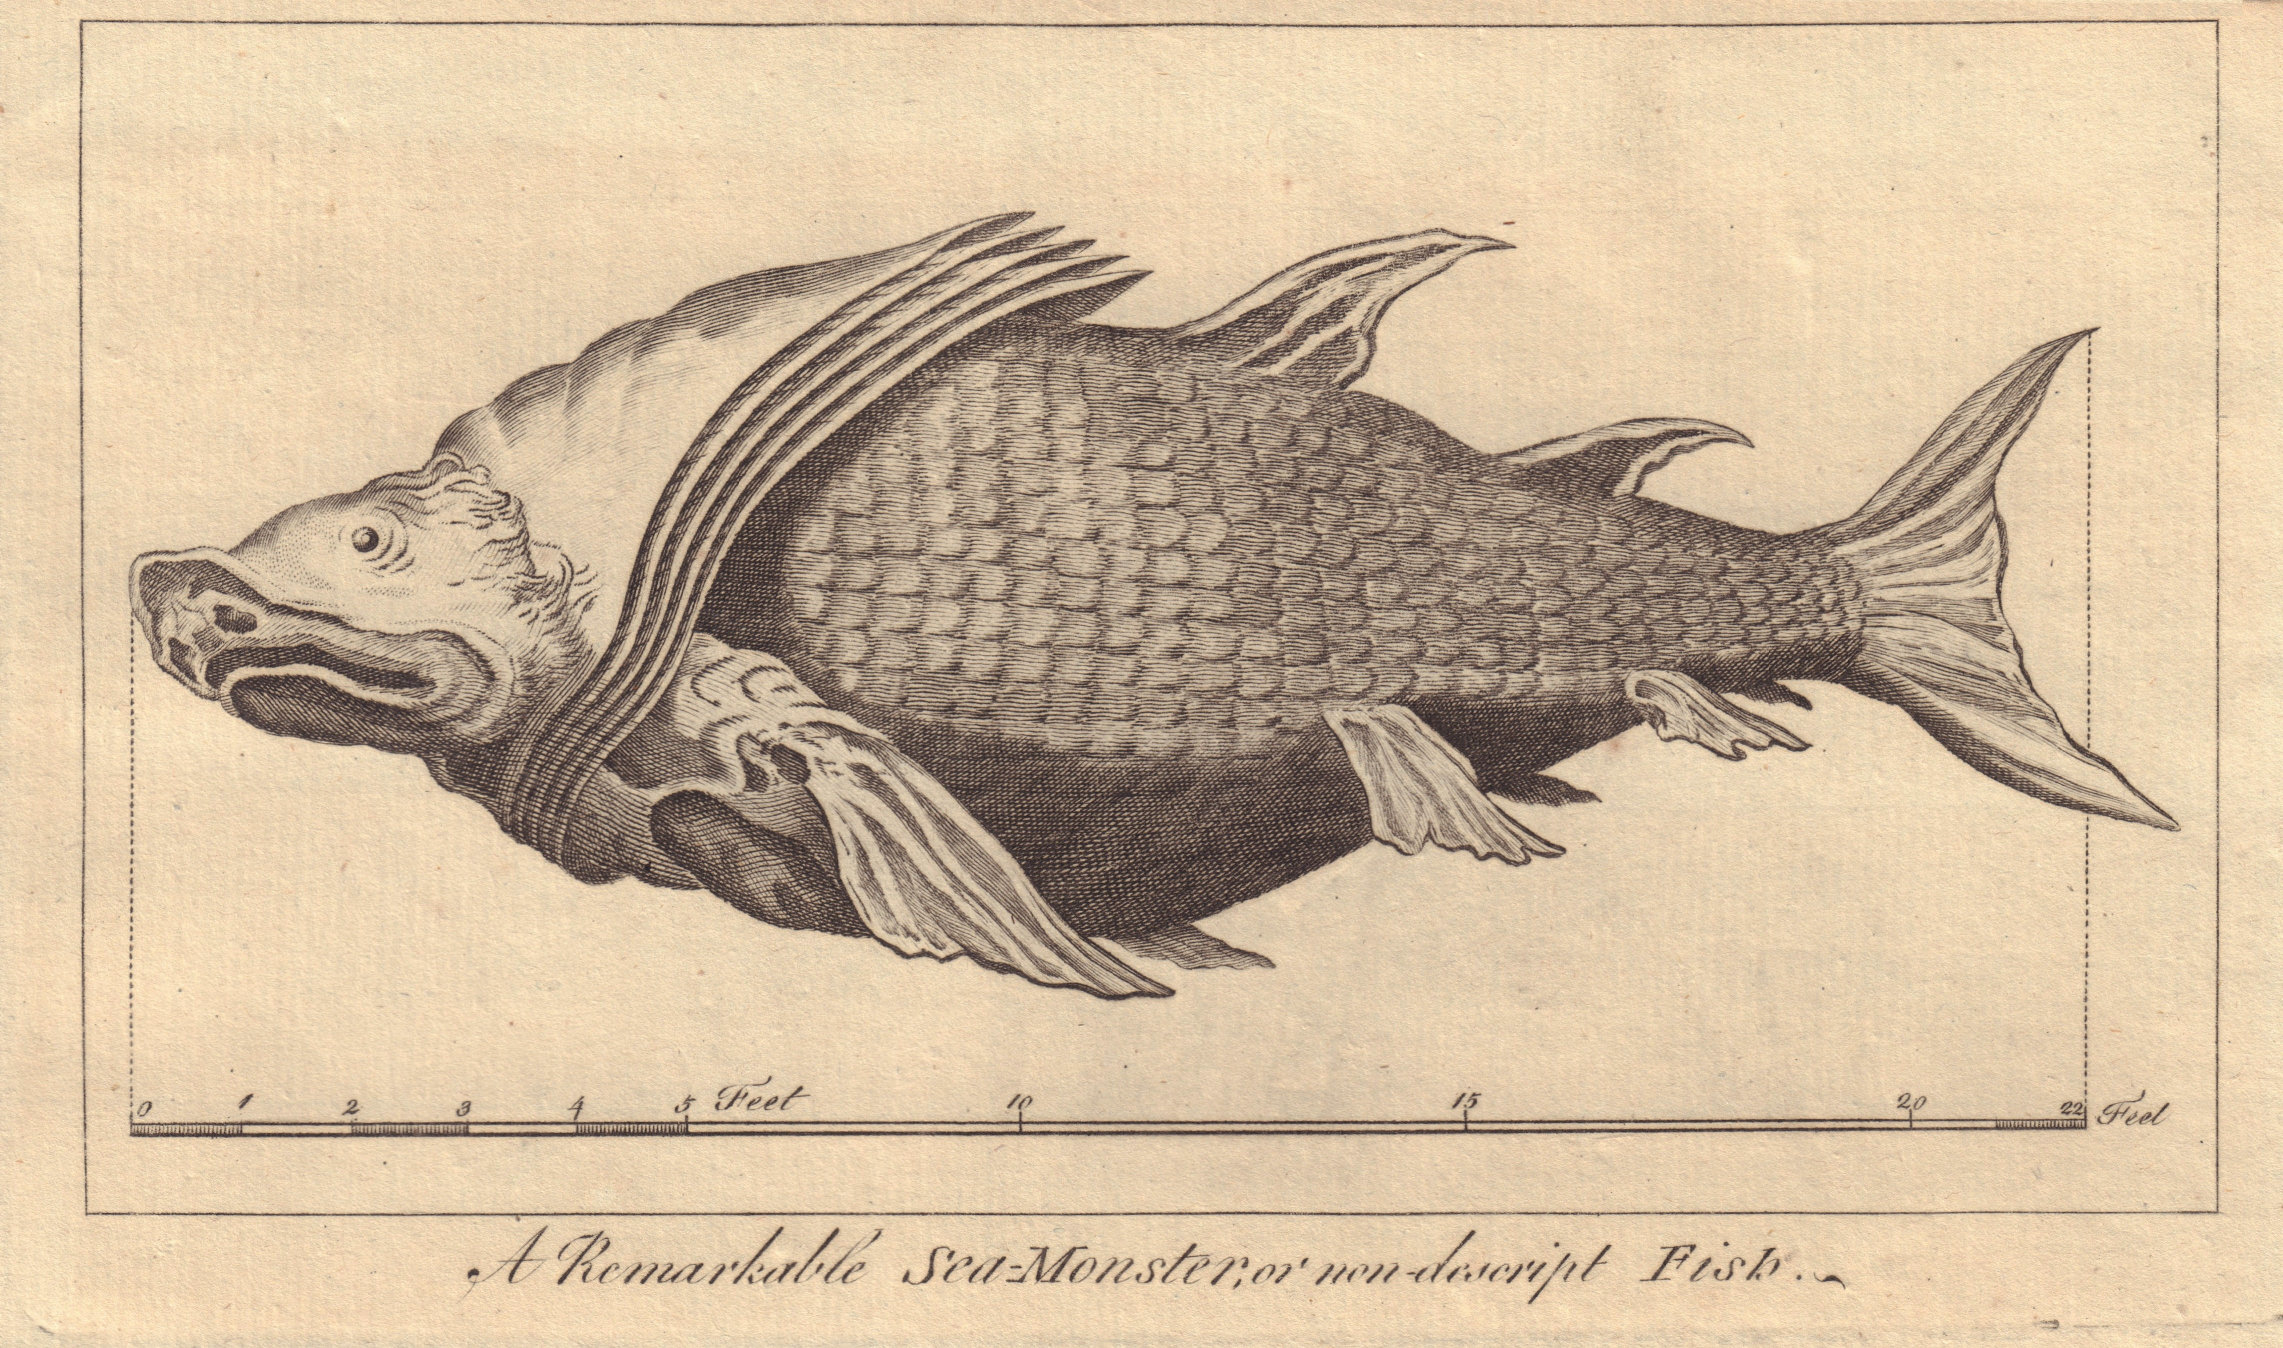 A Remarkable Sea-Monster or non-described Fish taken in the Mediterranean 1766